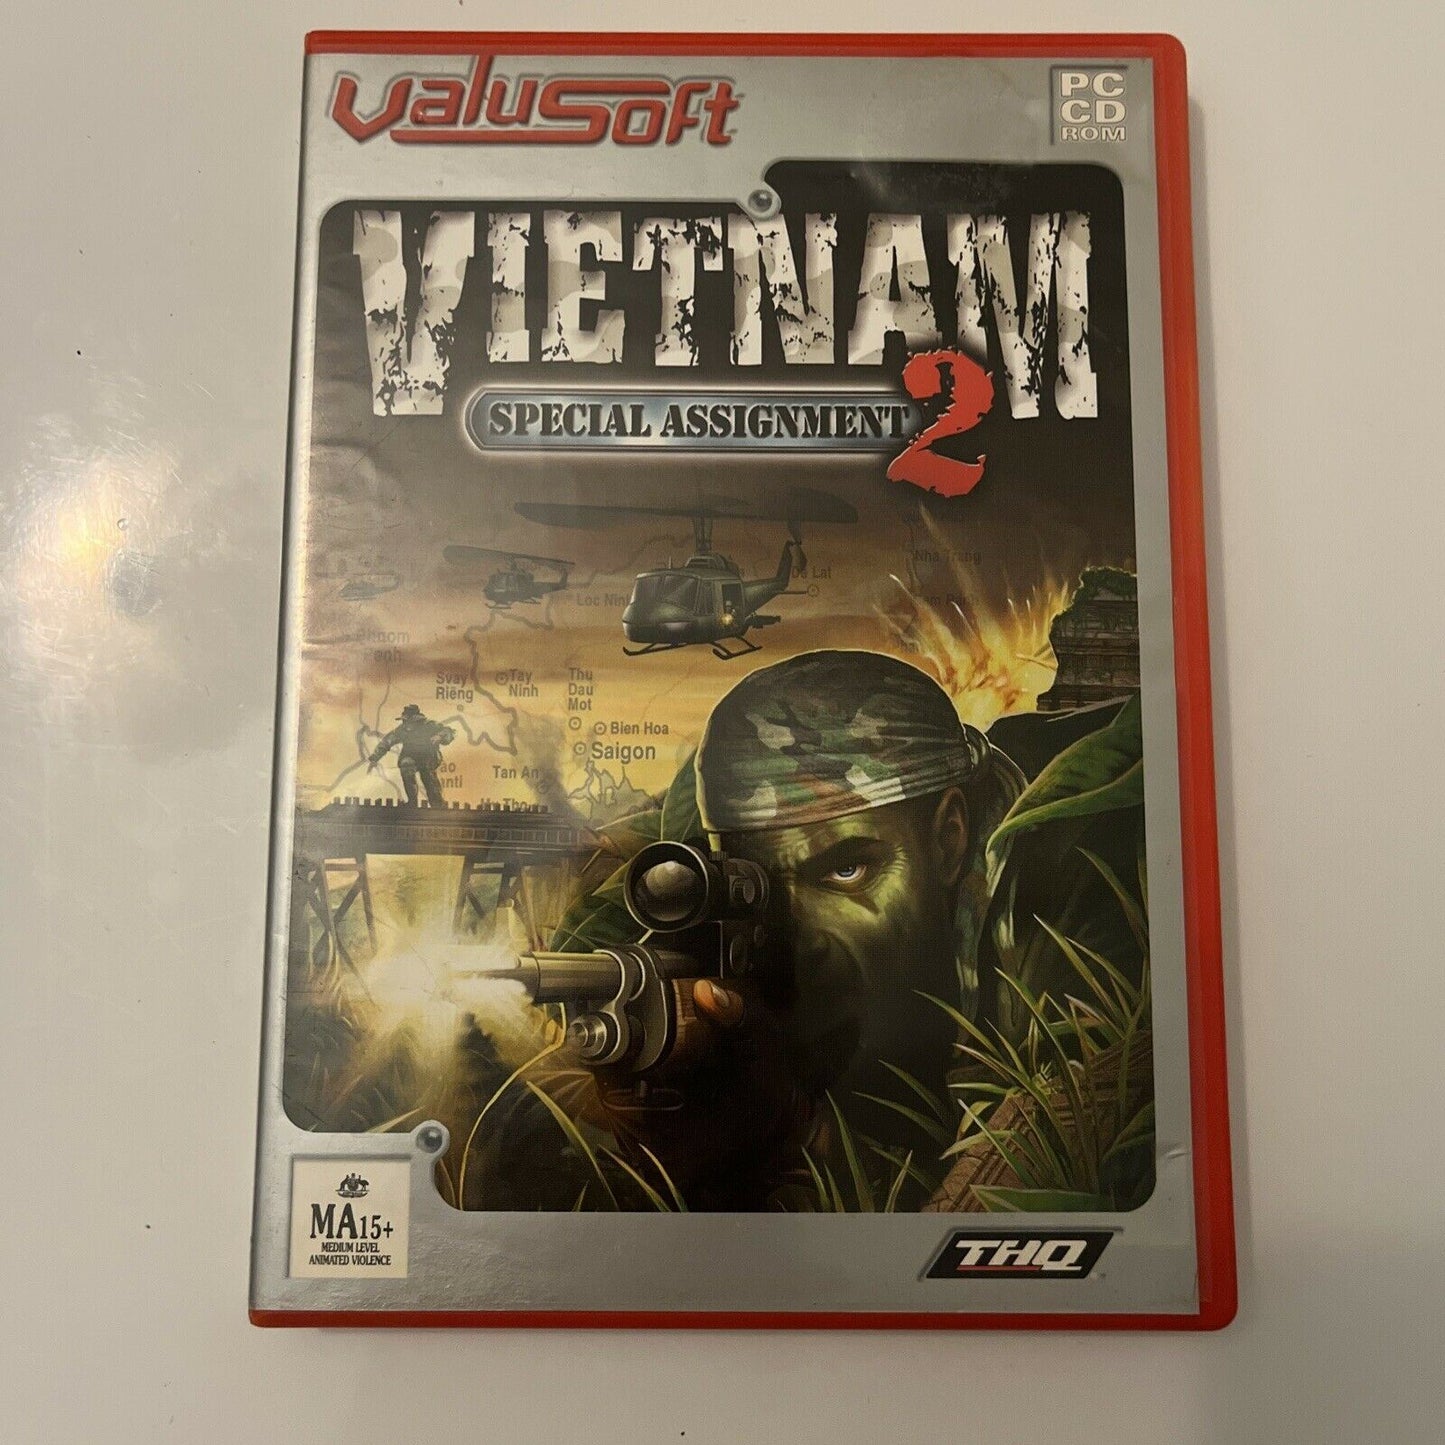 vietnam special assignment 2